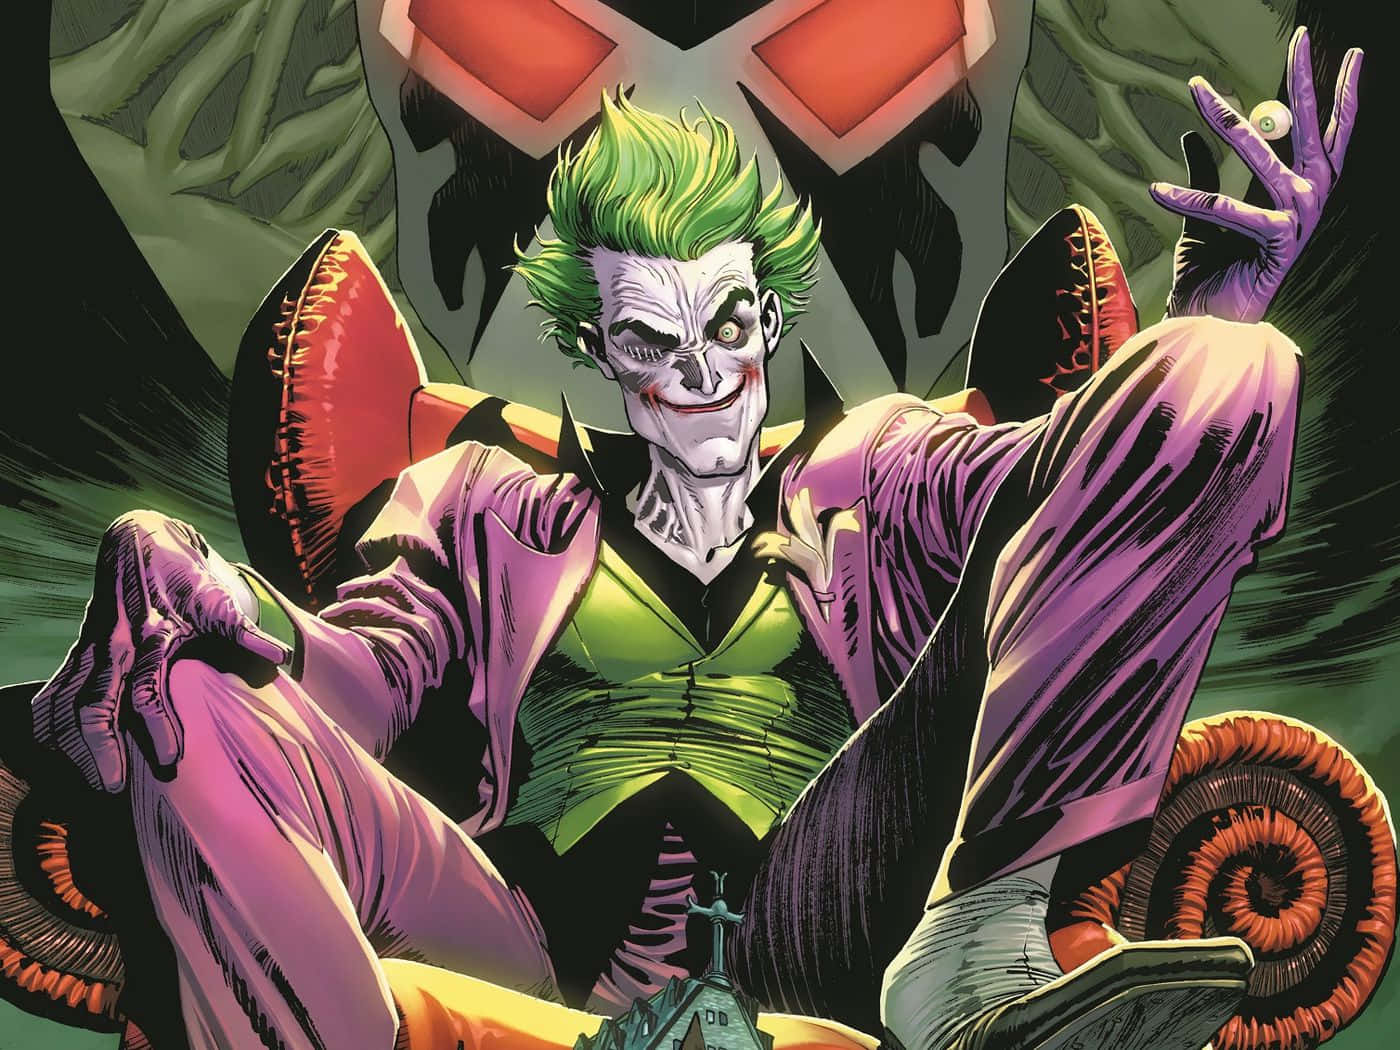 Historien om den ikoniske superskurk, The Joker